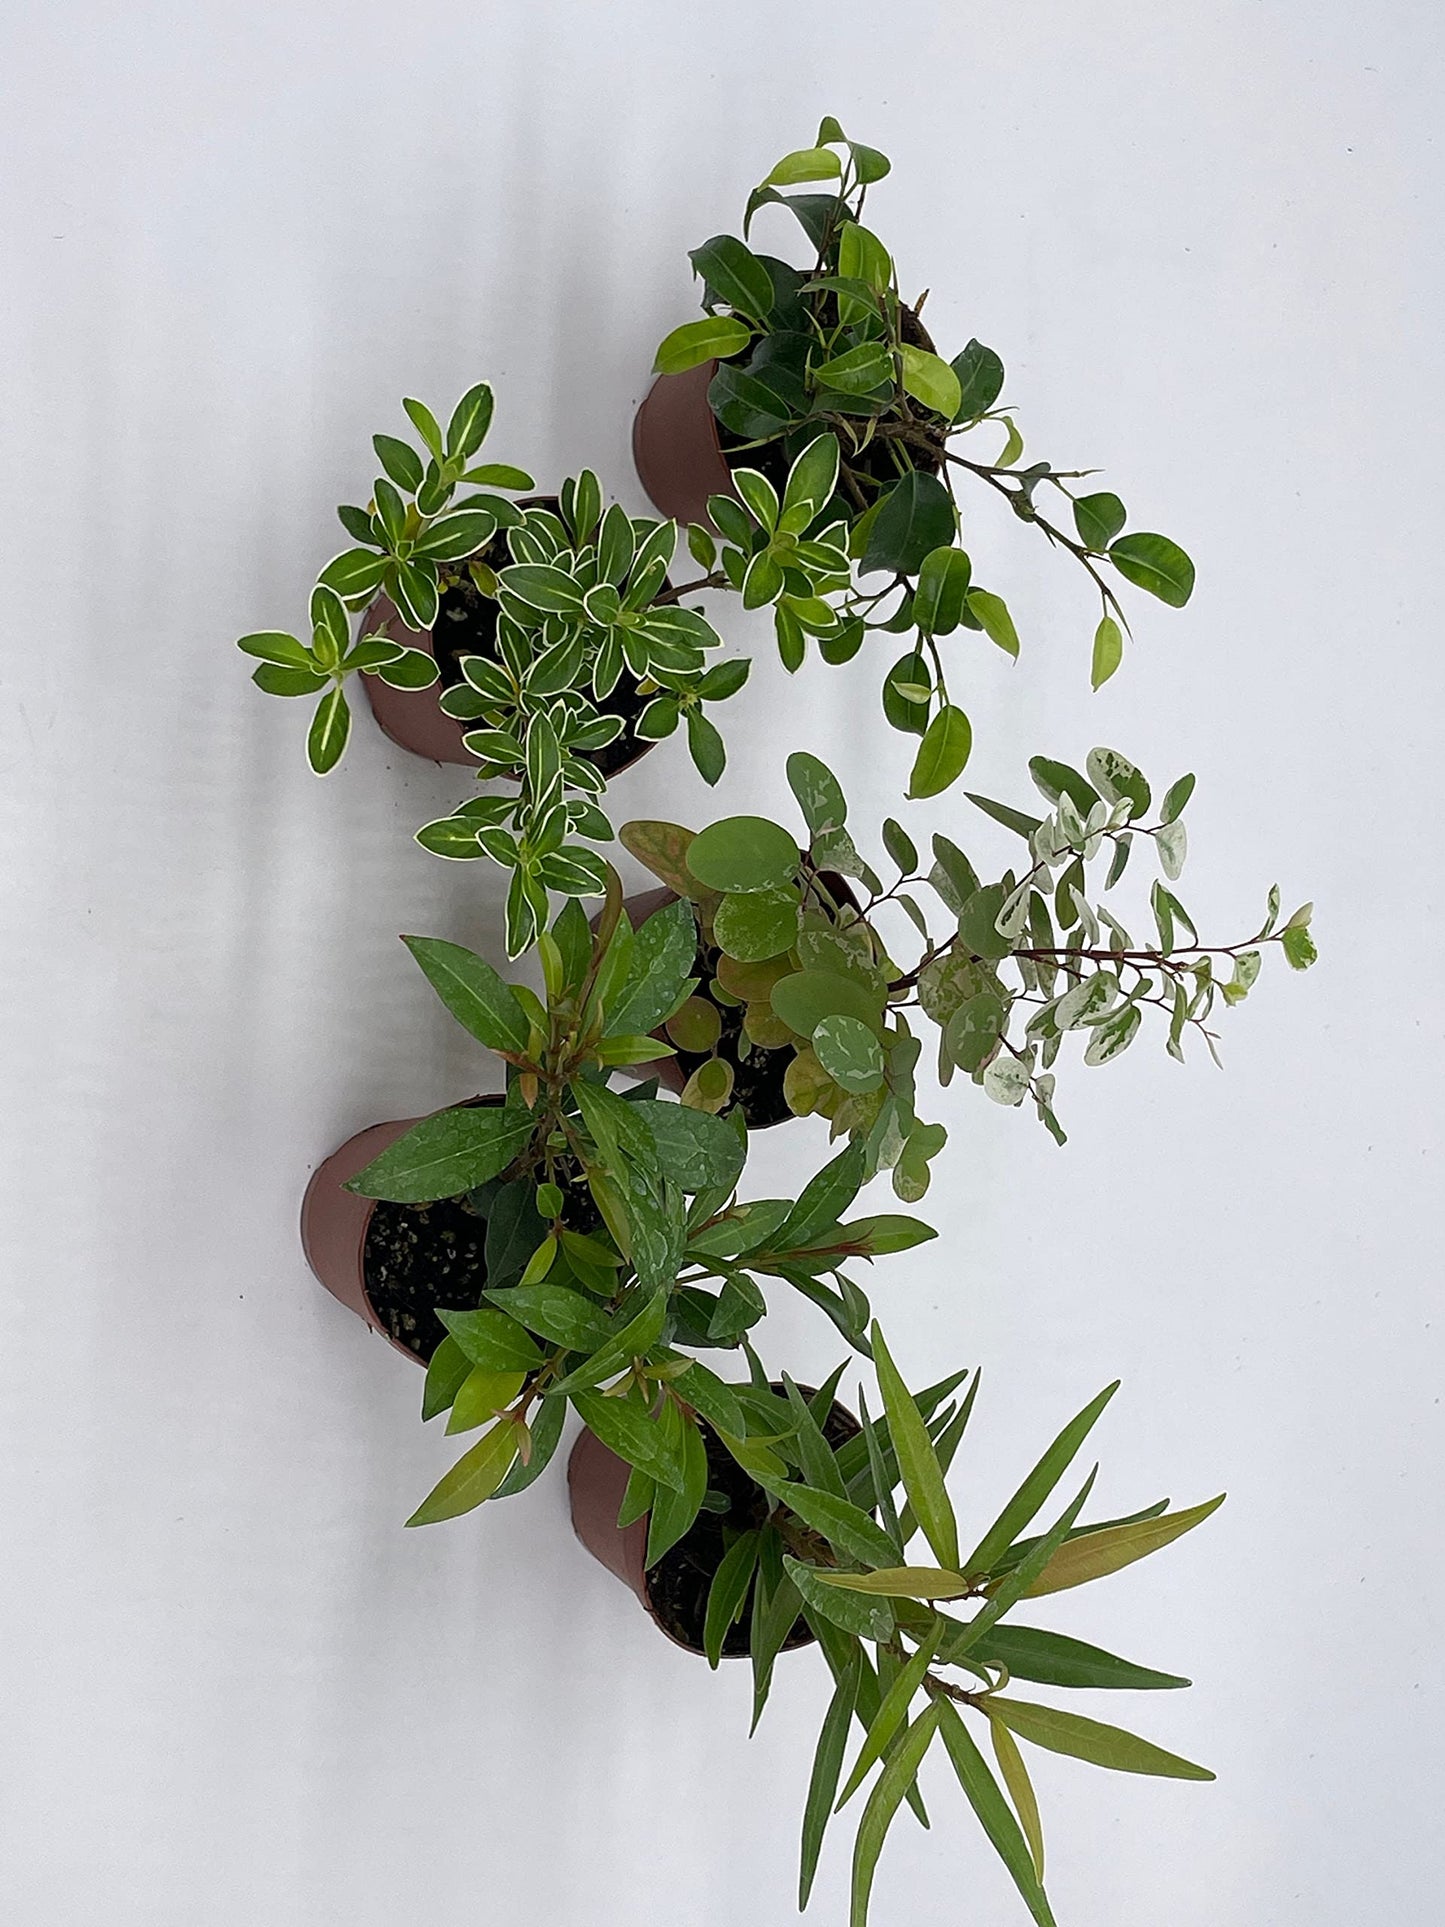 Pre-Bonsai & Ficus Assortment, 2 inch pots, 5 Different Shrubby Ferns, Bonsai Starts